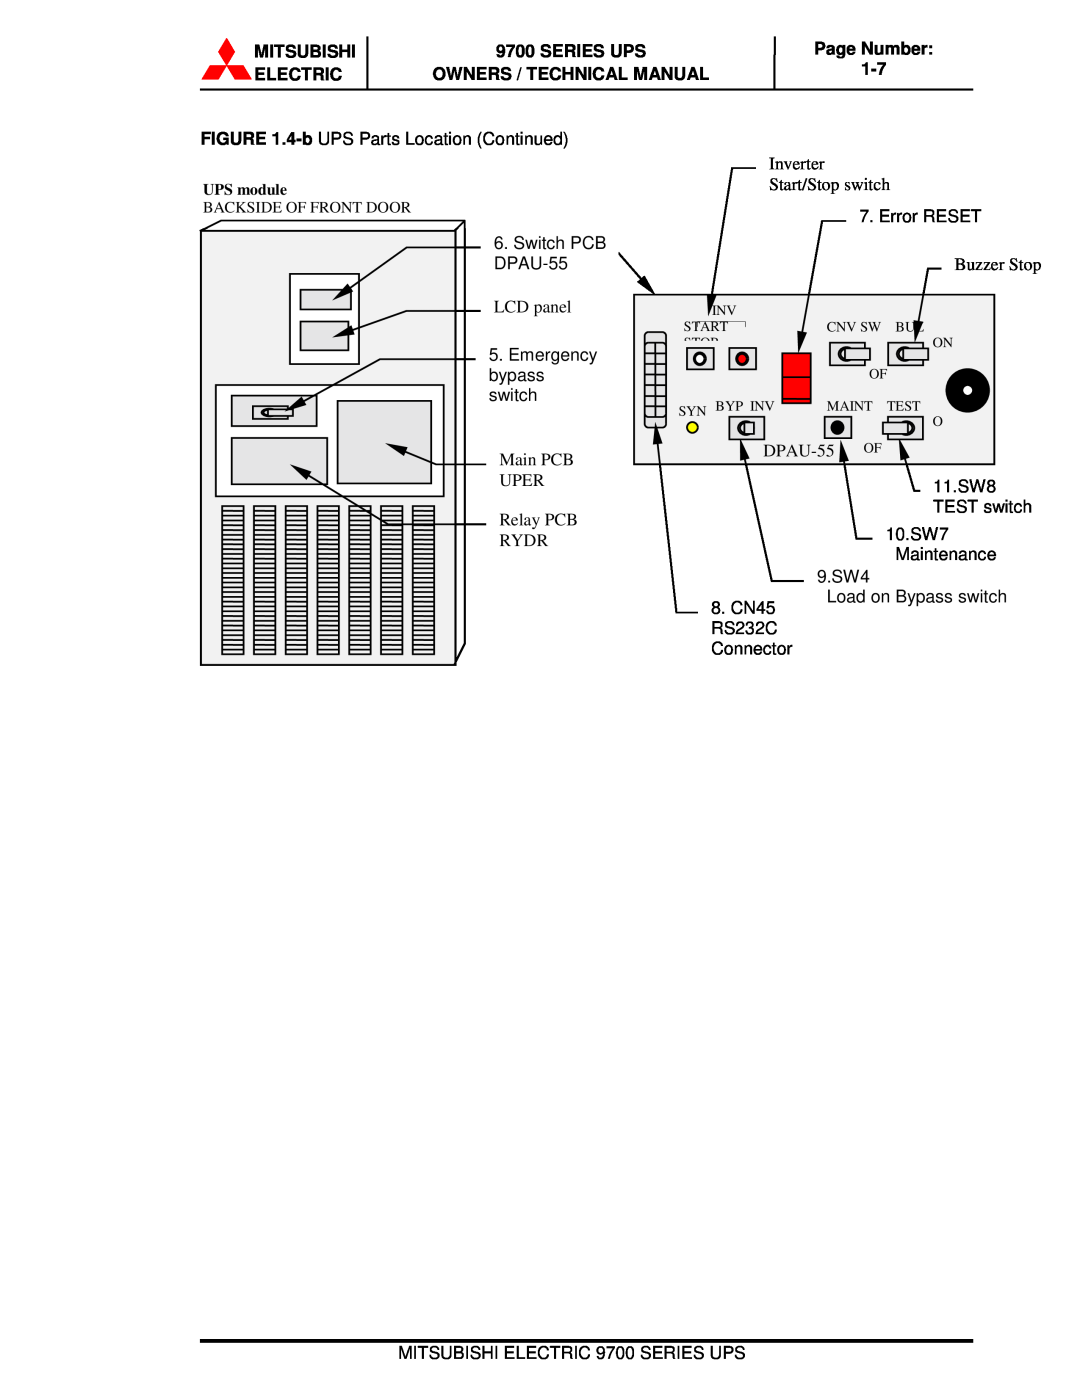 Mitsubishi Electronics 9700 Series Inverter, Start/Stop switch, Buzzer Stop, LCD panel, Main PCB, DPAU-55 OF, Uper, Rydr 